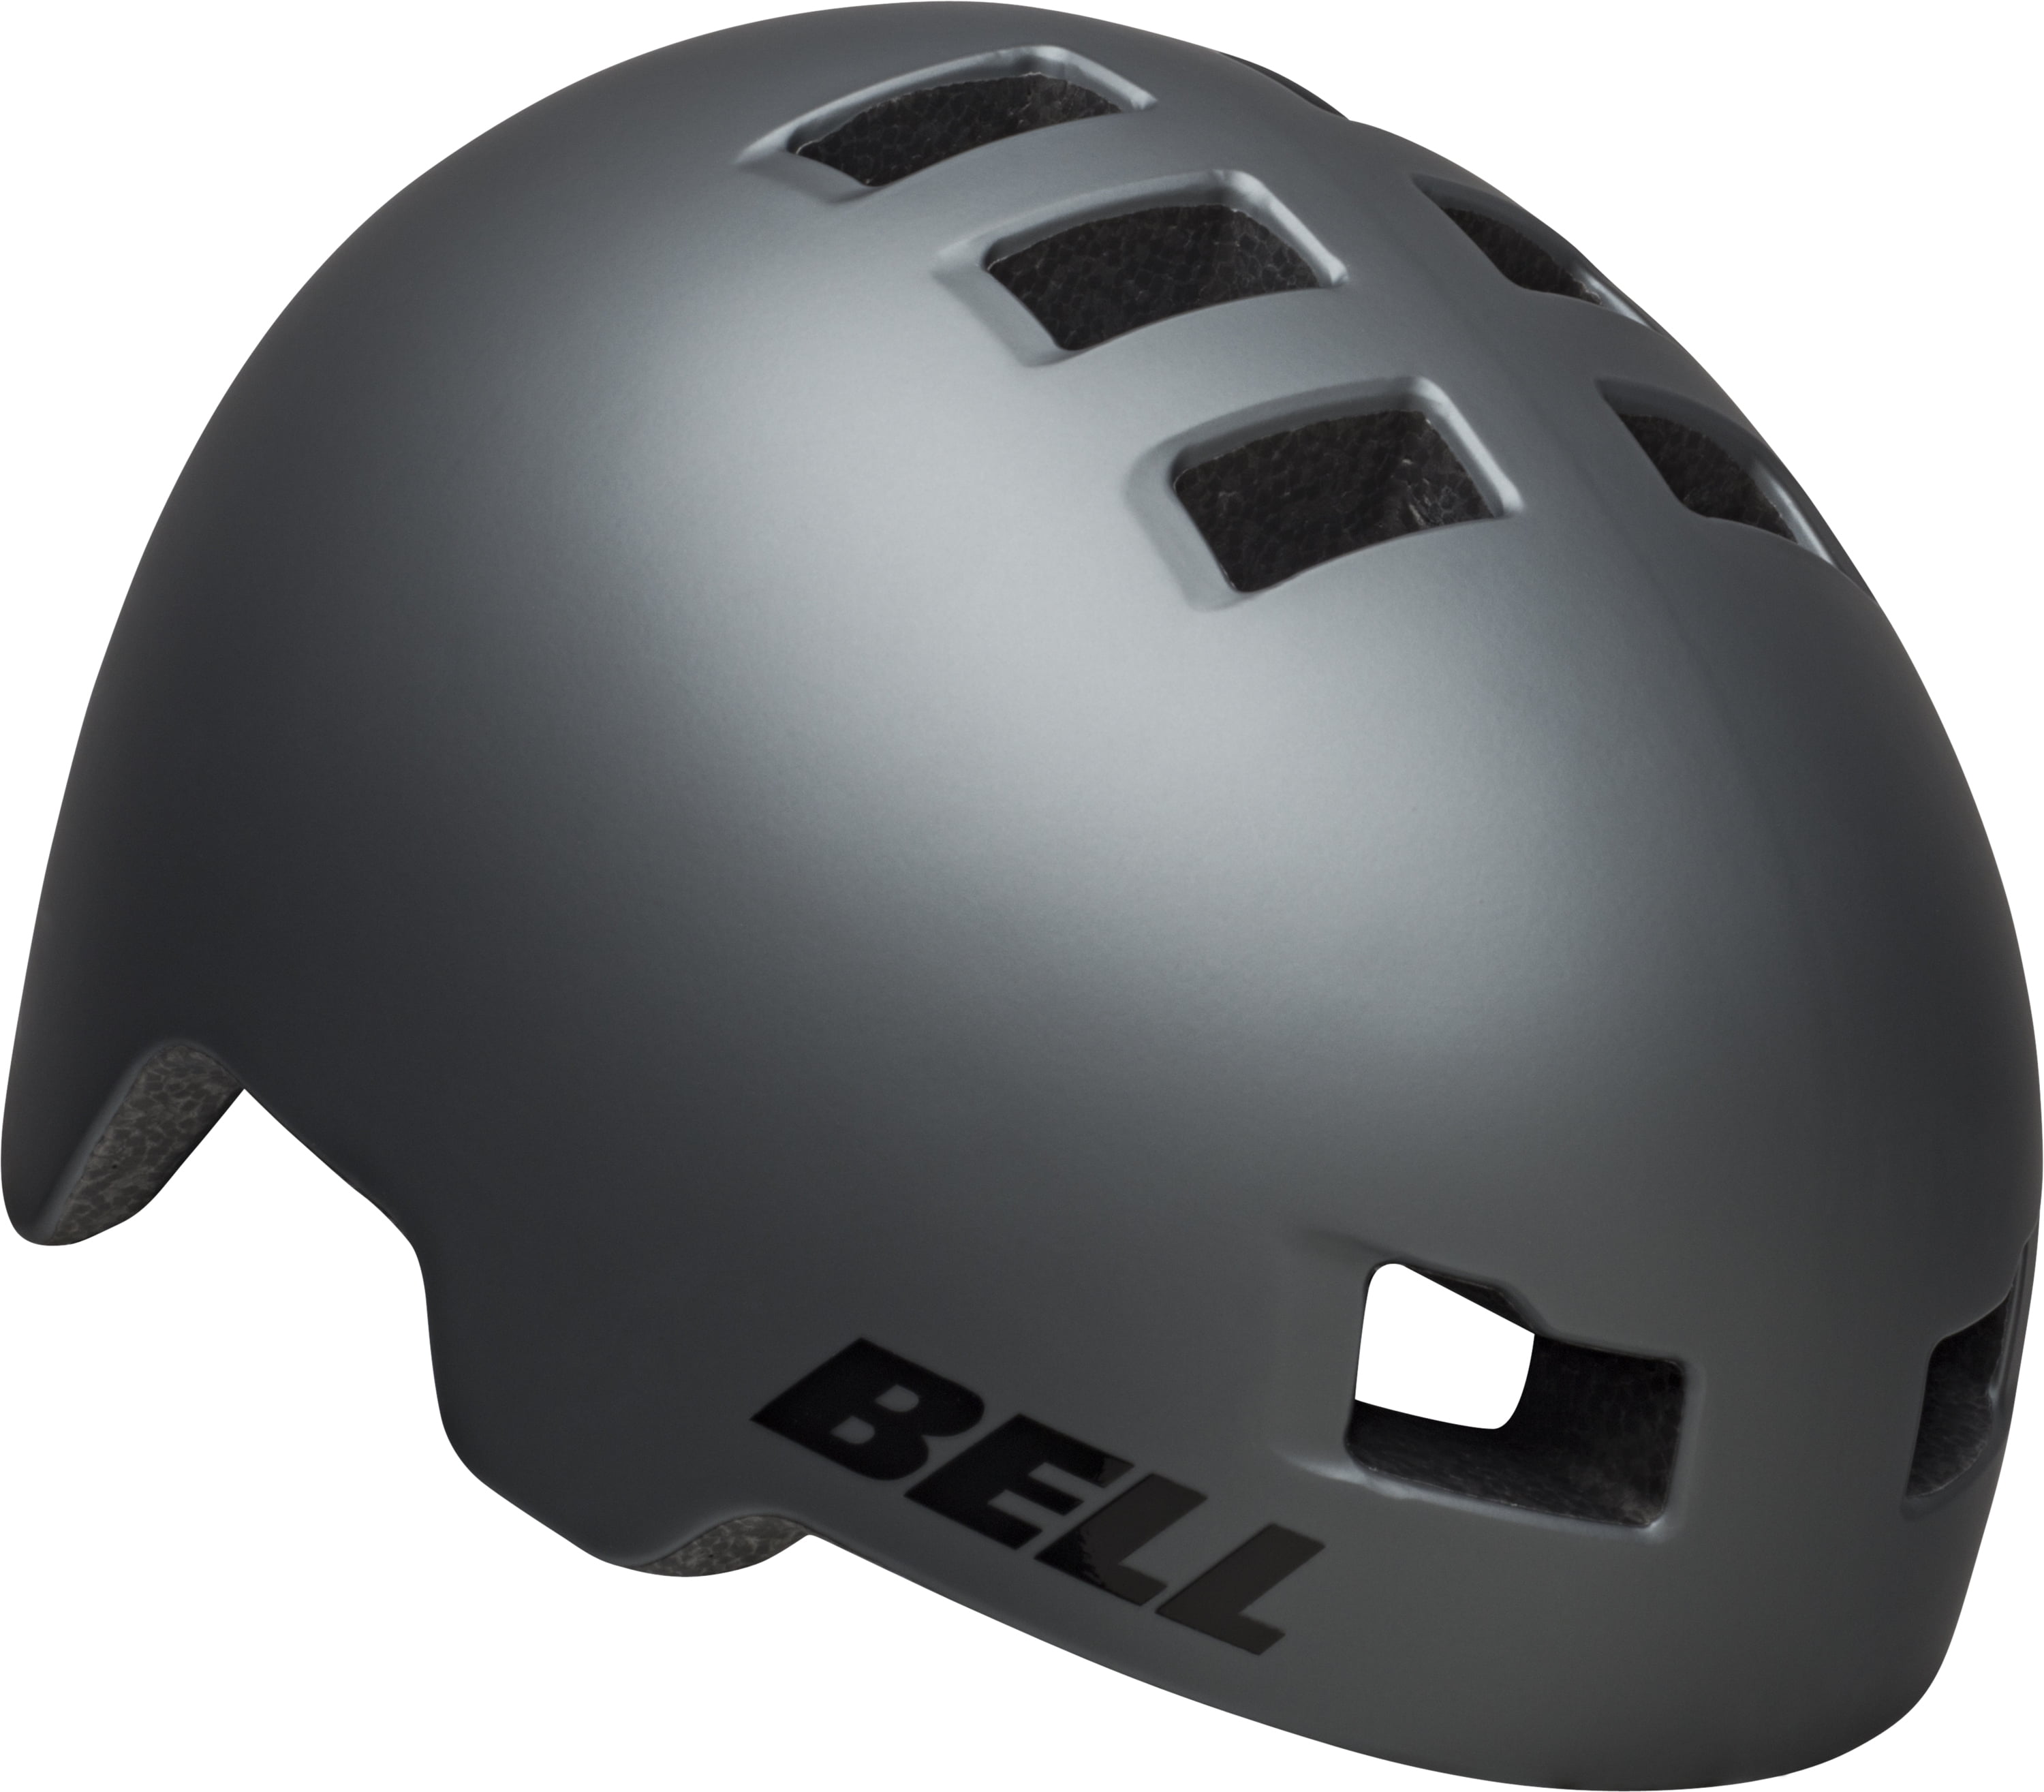 Details about   Bell Adult Manifold Bike Helmet Watercolors 